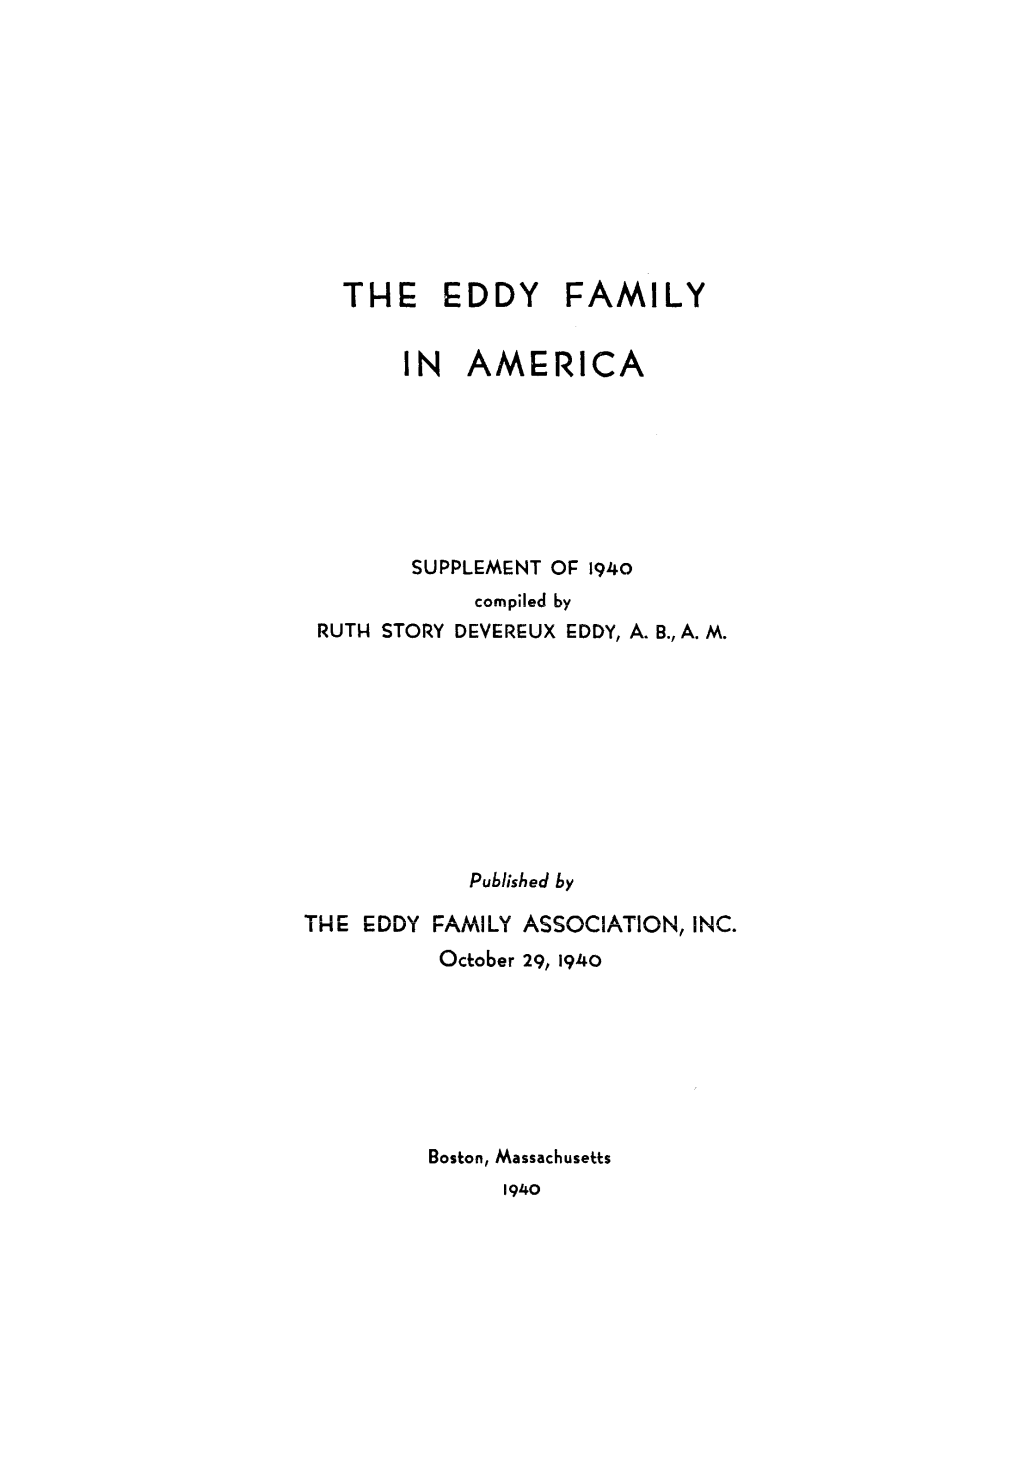 The Eddy Family in America"